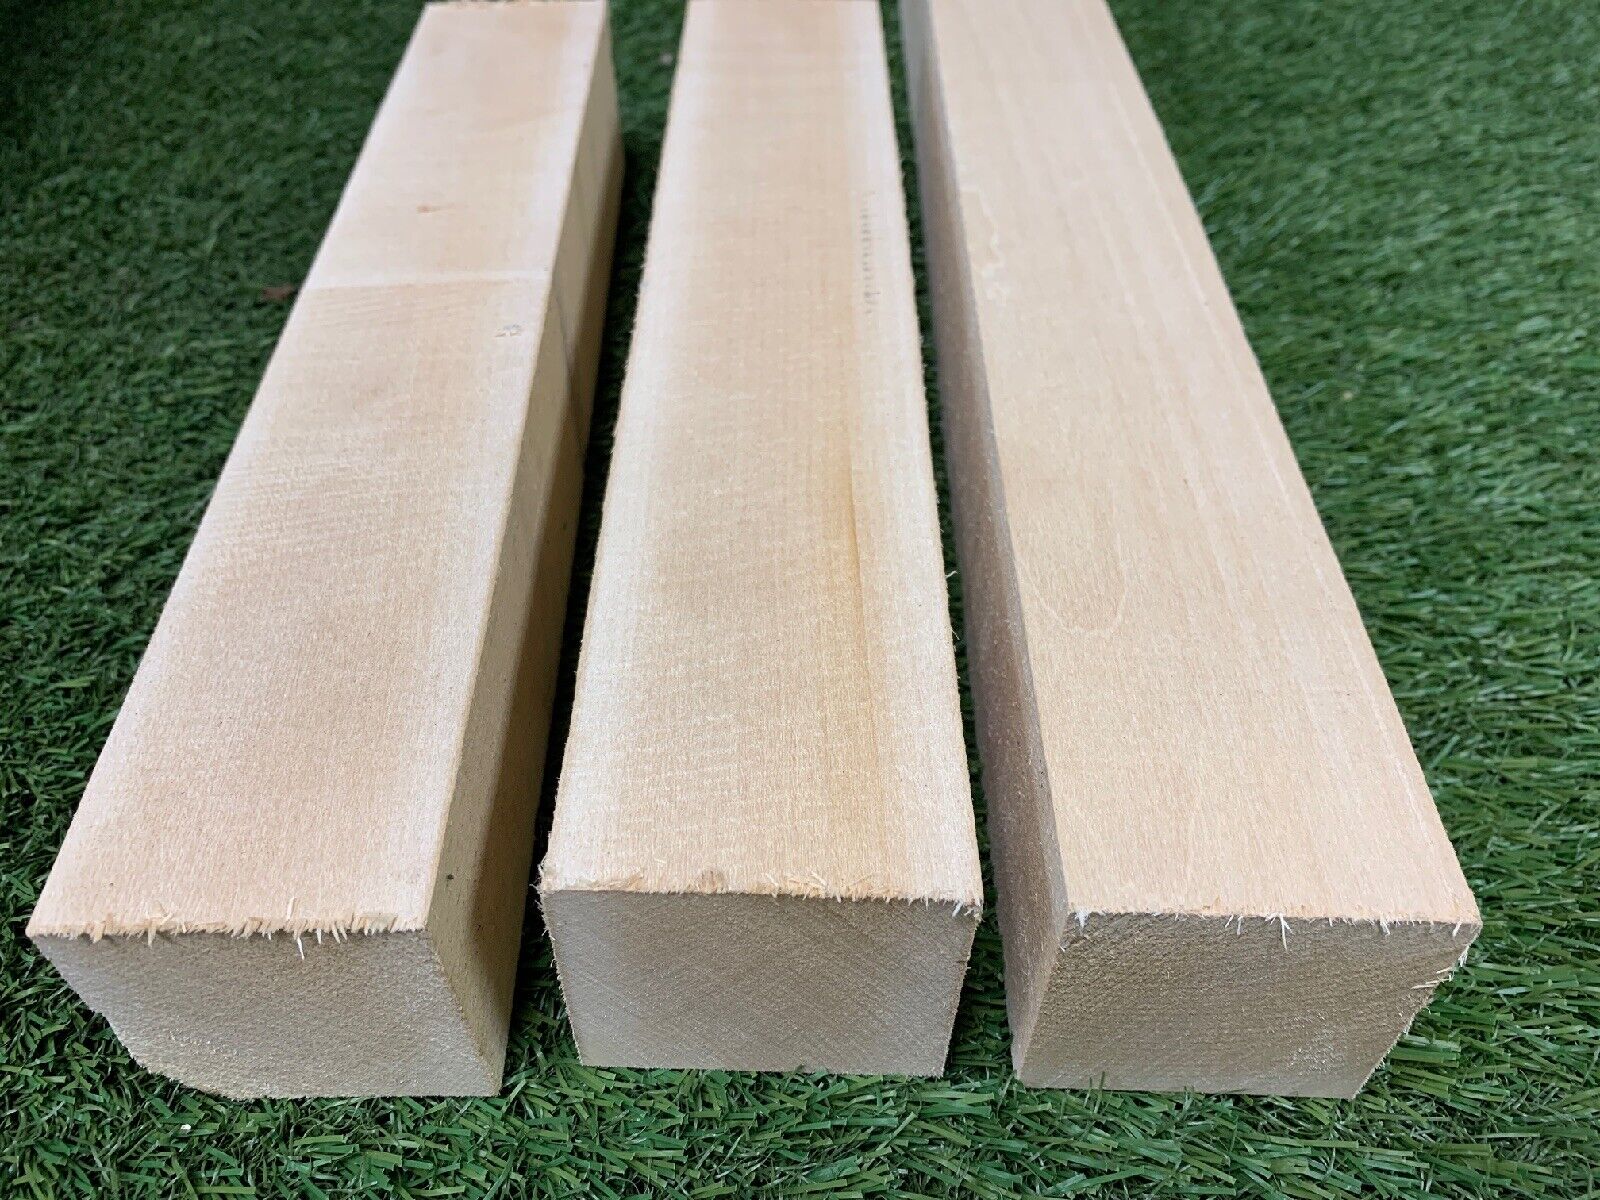 3 PACK SET,    2" x 2" x 12"  Basswood Carving Wood Blocks Craft, Turning  EXOTIC WOOD ZONE Carving Blocks Craft Wood Lumber